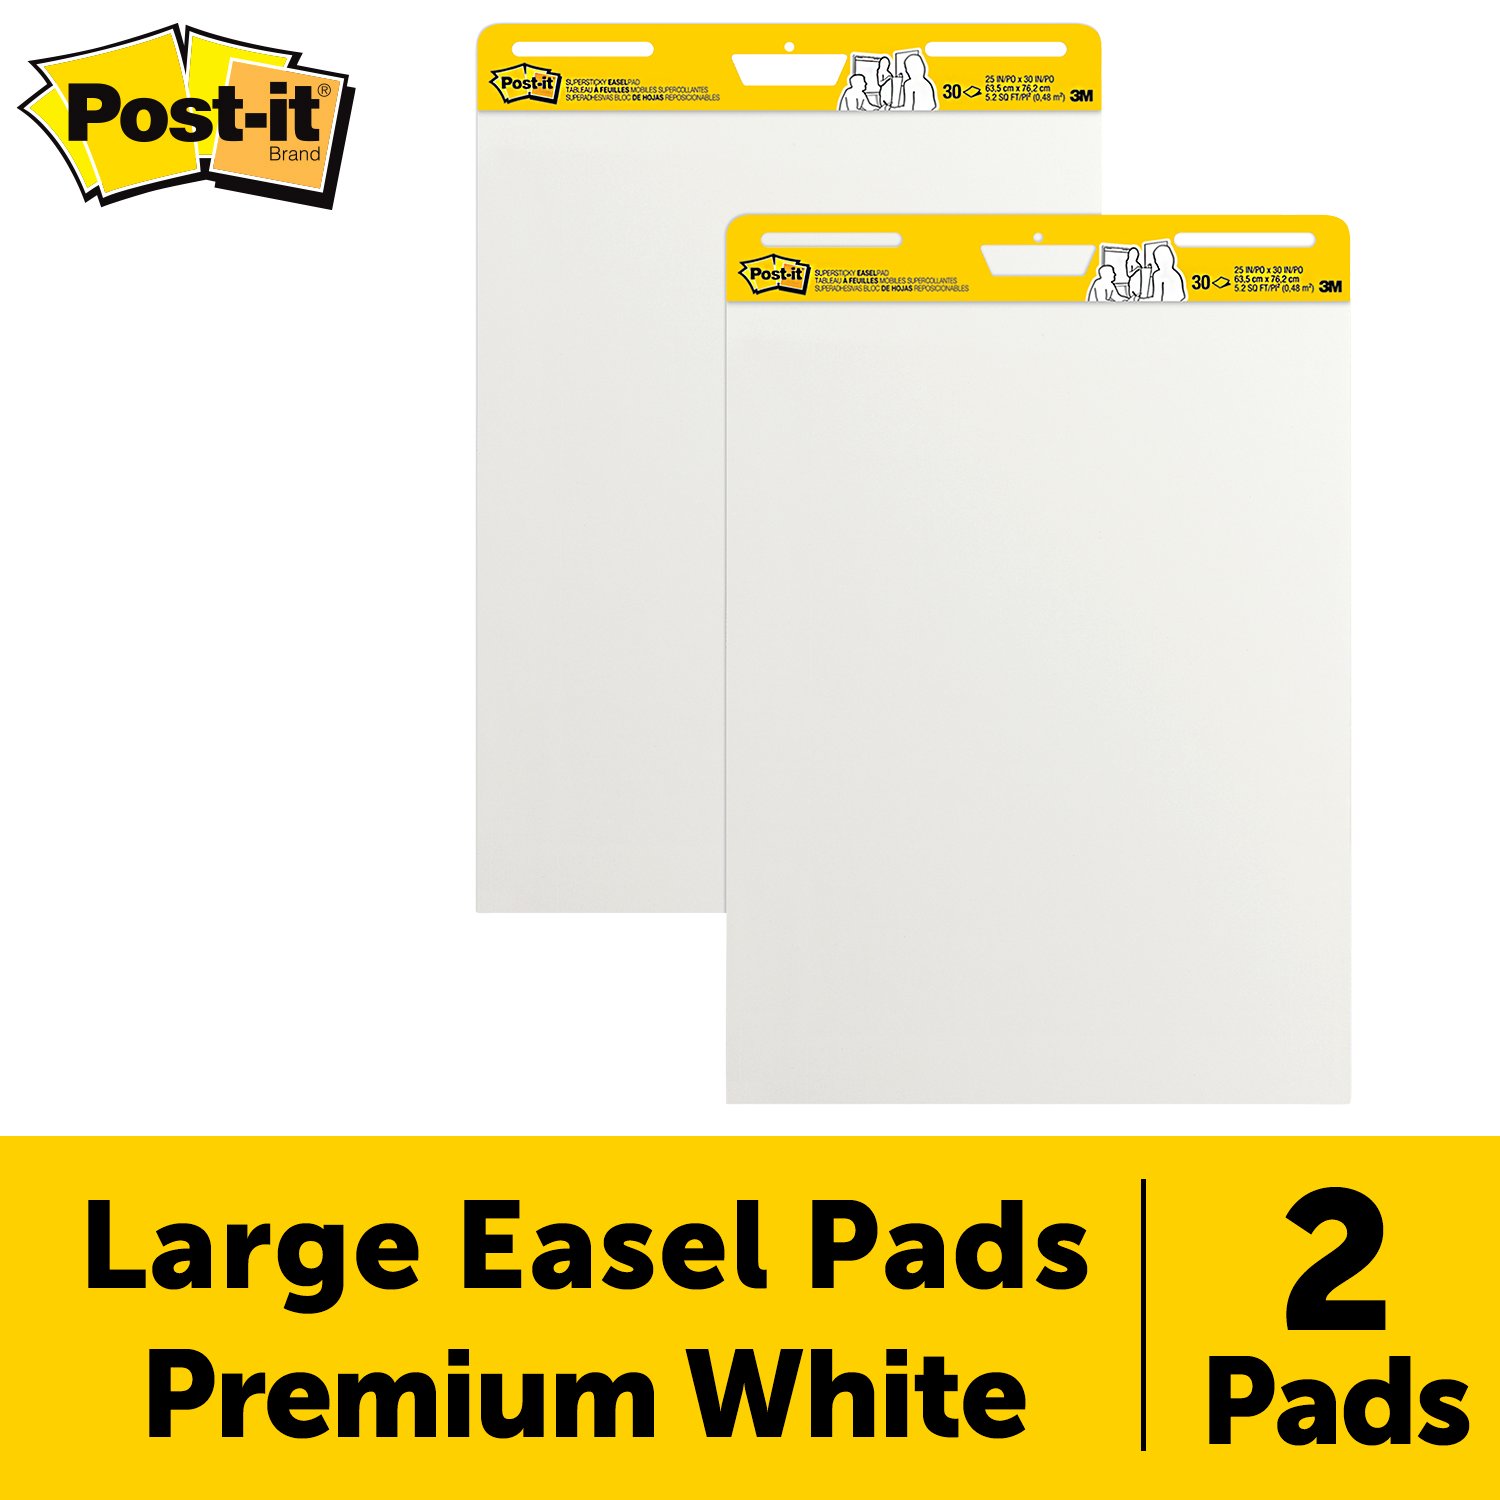 7100290334 - Post-it Easel Pad 559, 25 in x 30 in (63.5 cm x 76.2 cm)